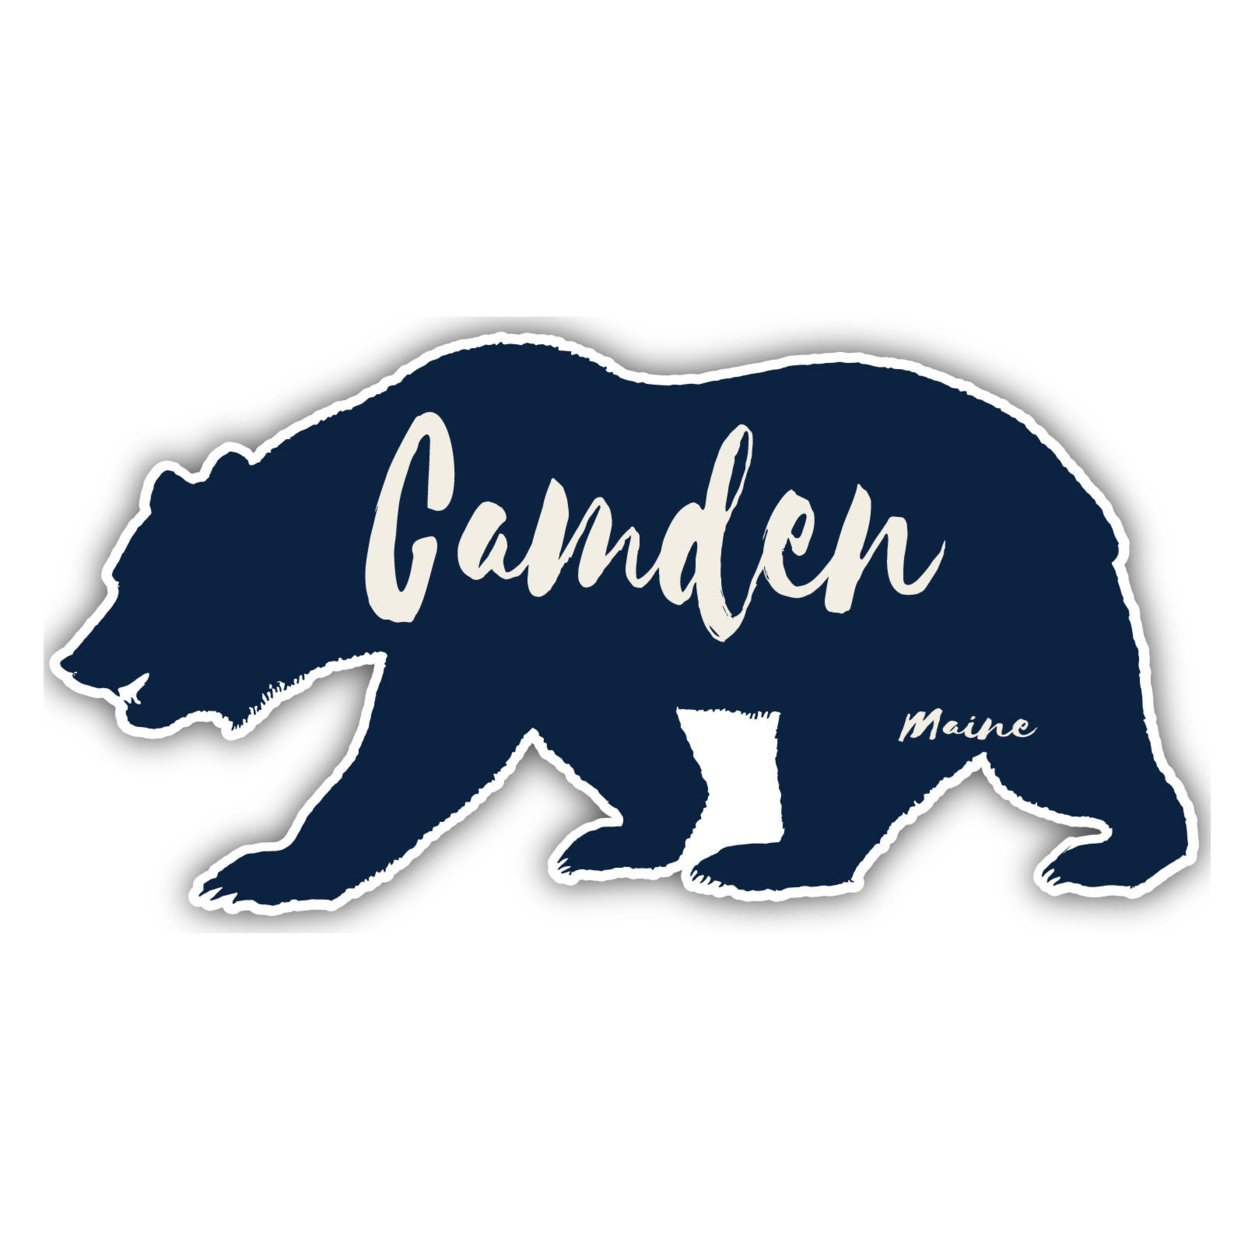 Camden Maine Souvenir Decorative Stickers (Choose Theme And Size) - Single Unit, 10-Inch, Tent